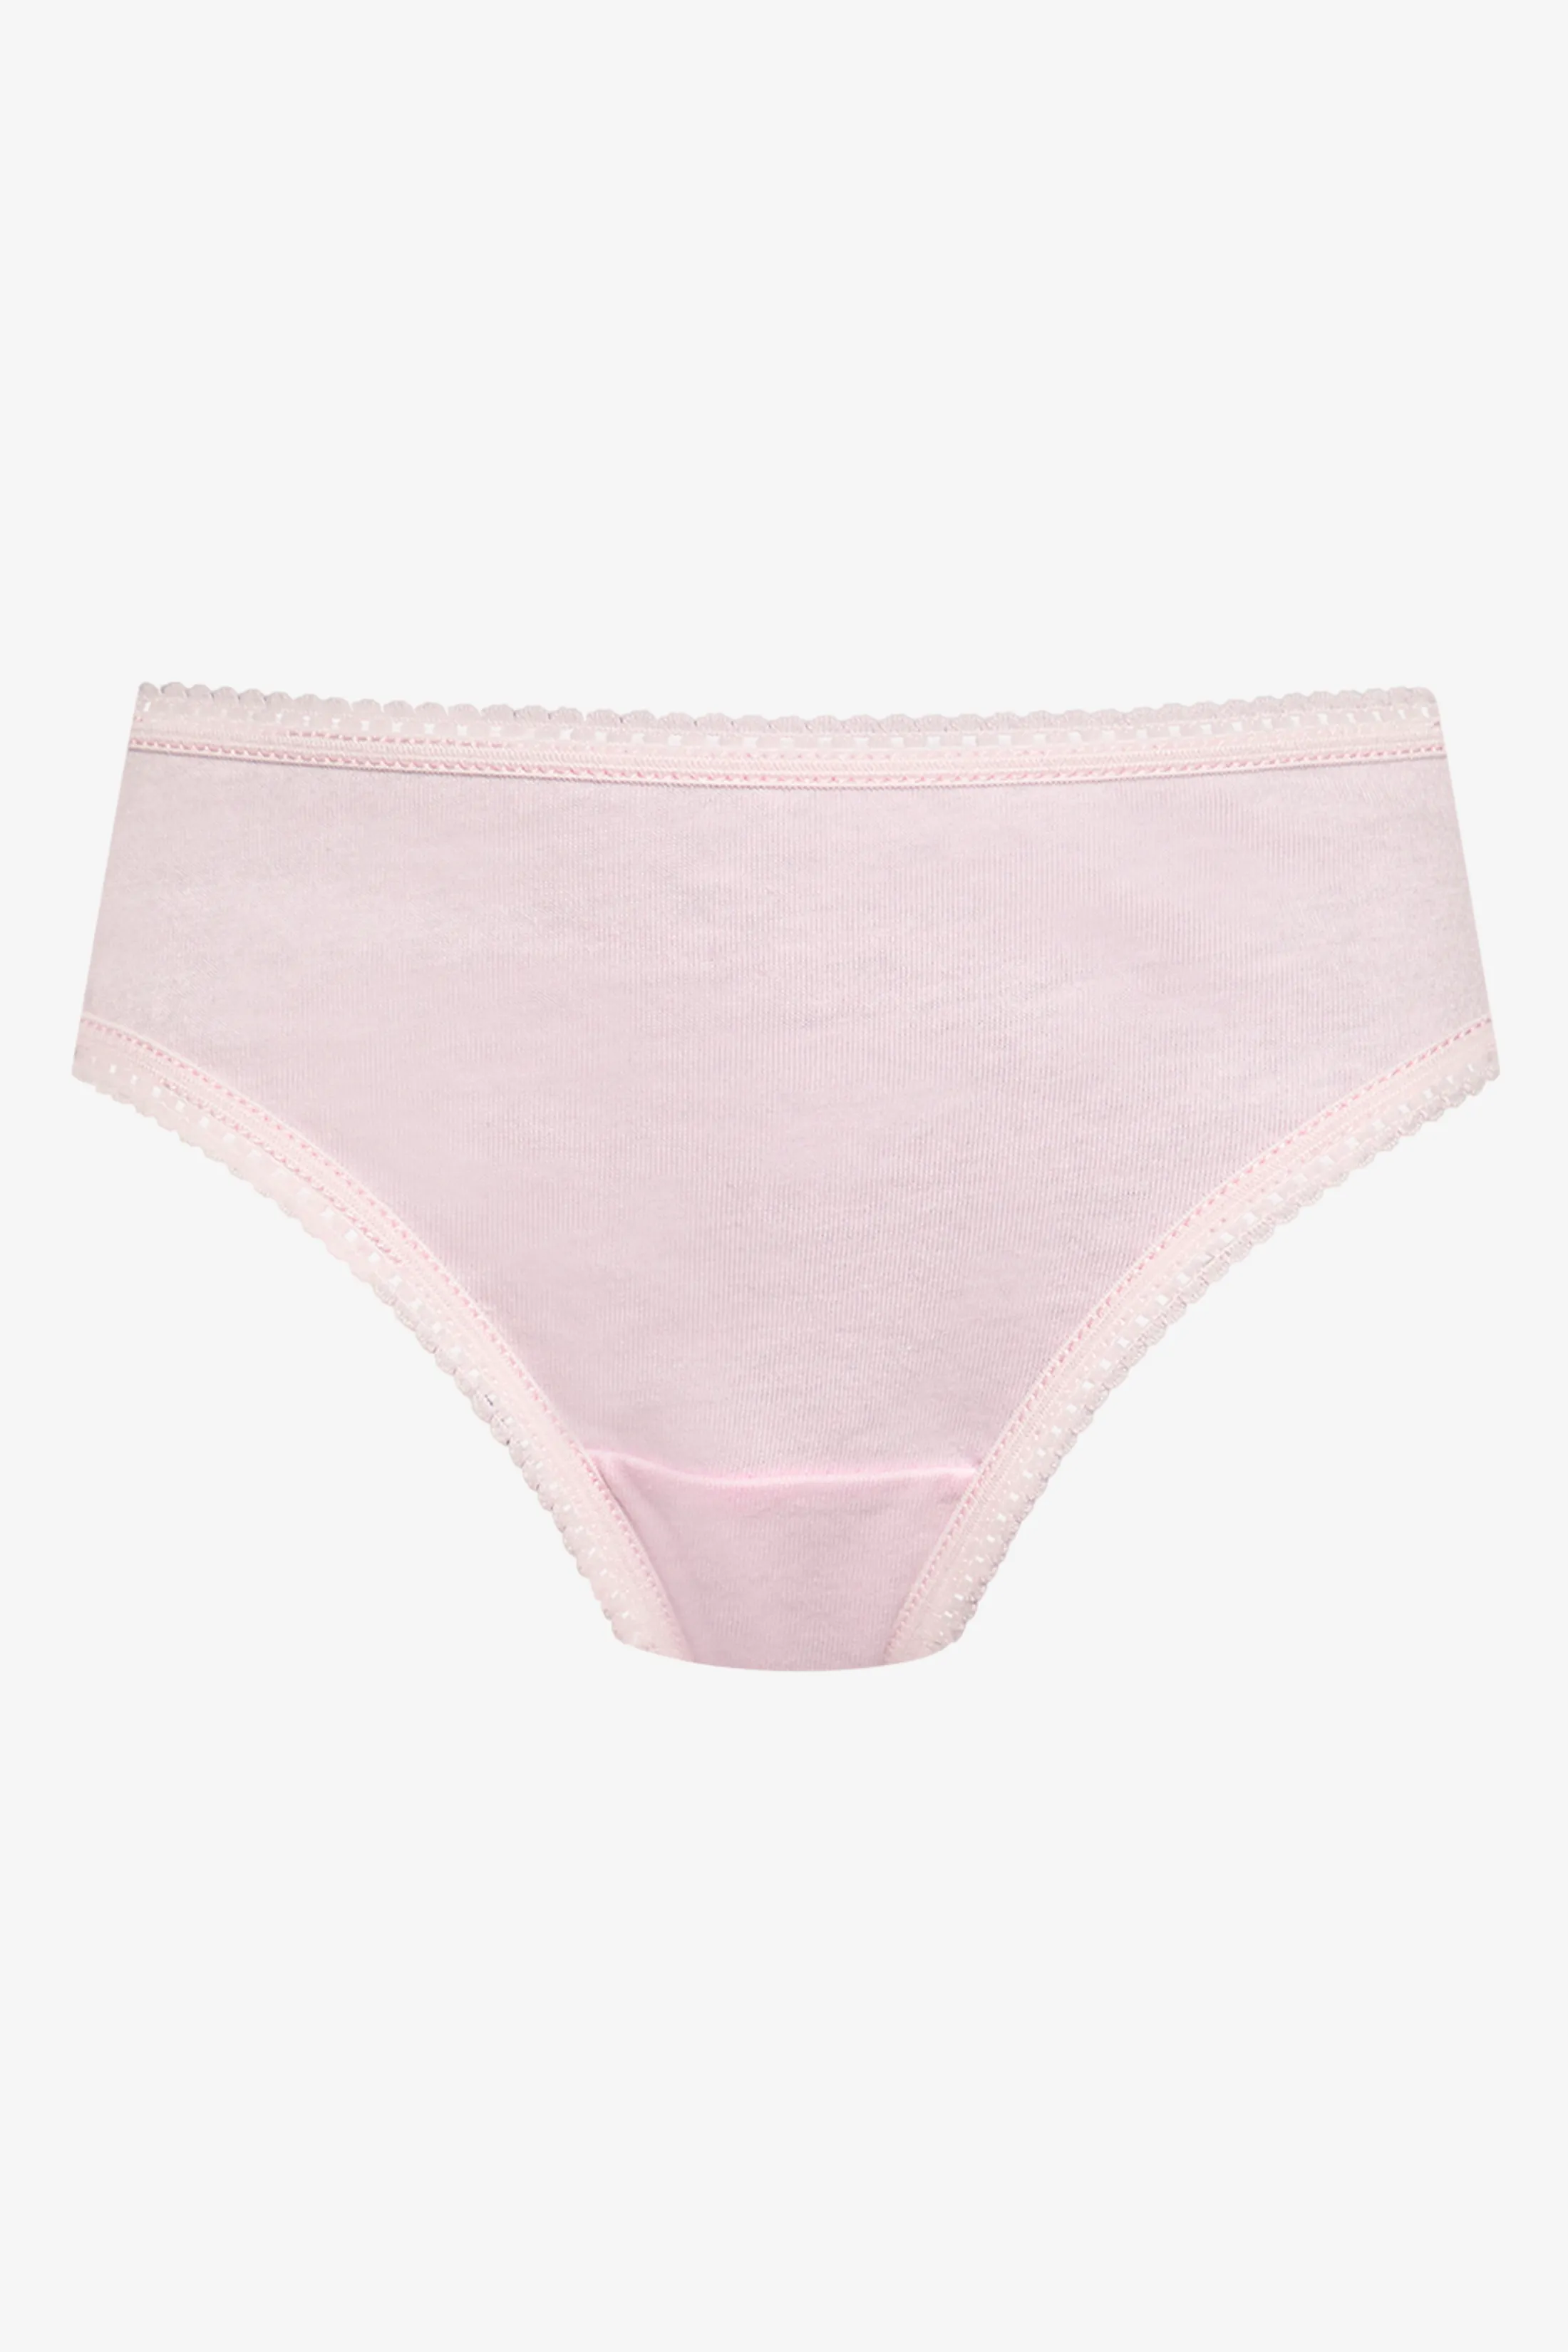 Pink 3 for 2 panties, Pantie Offer